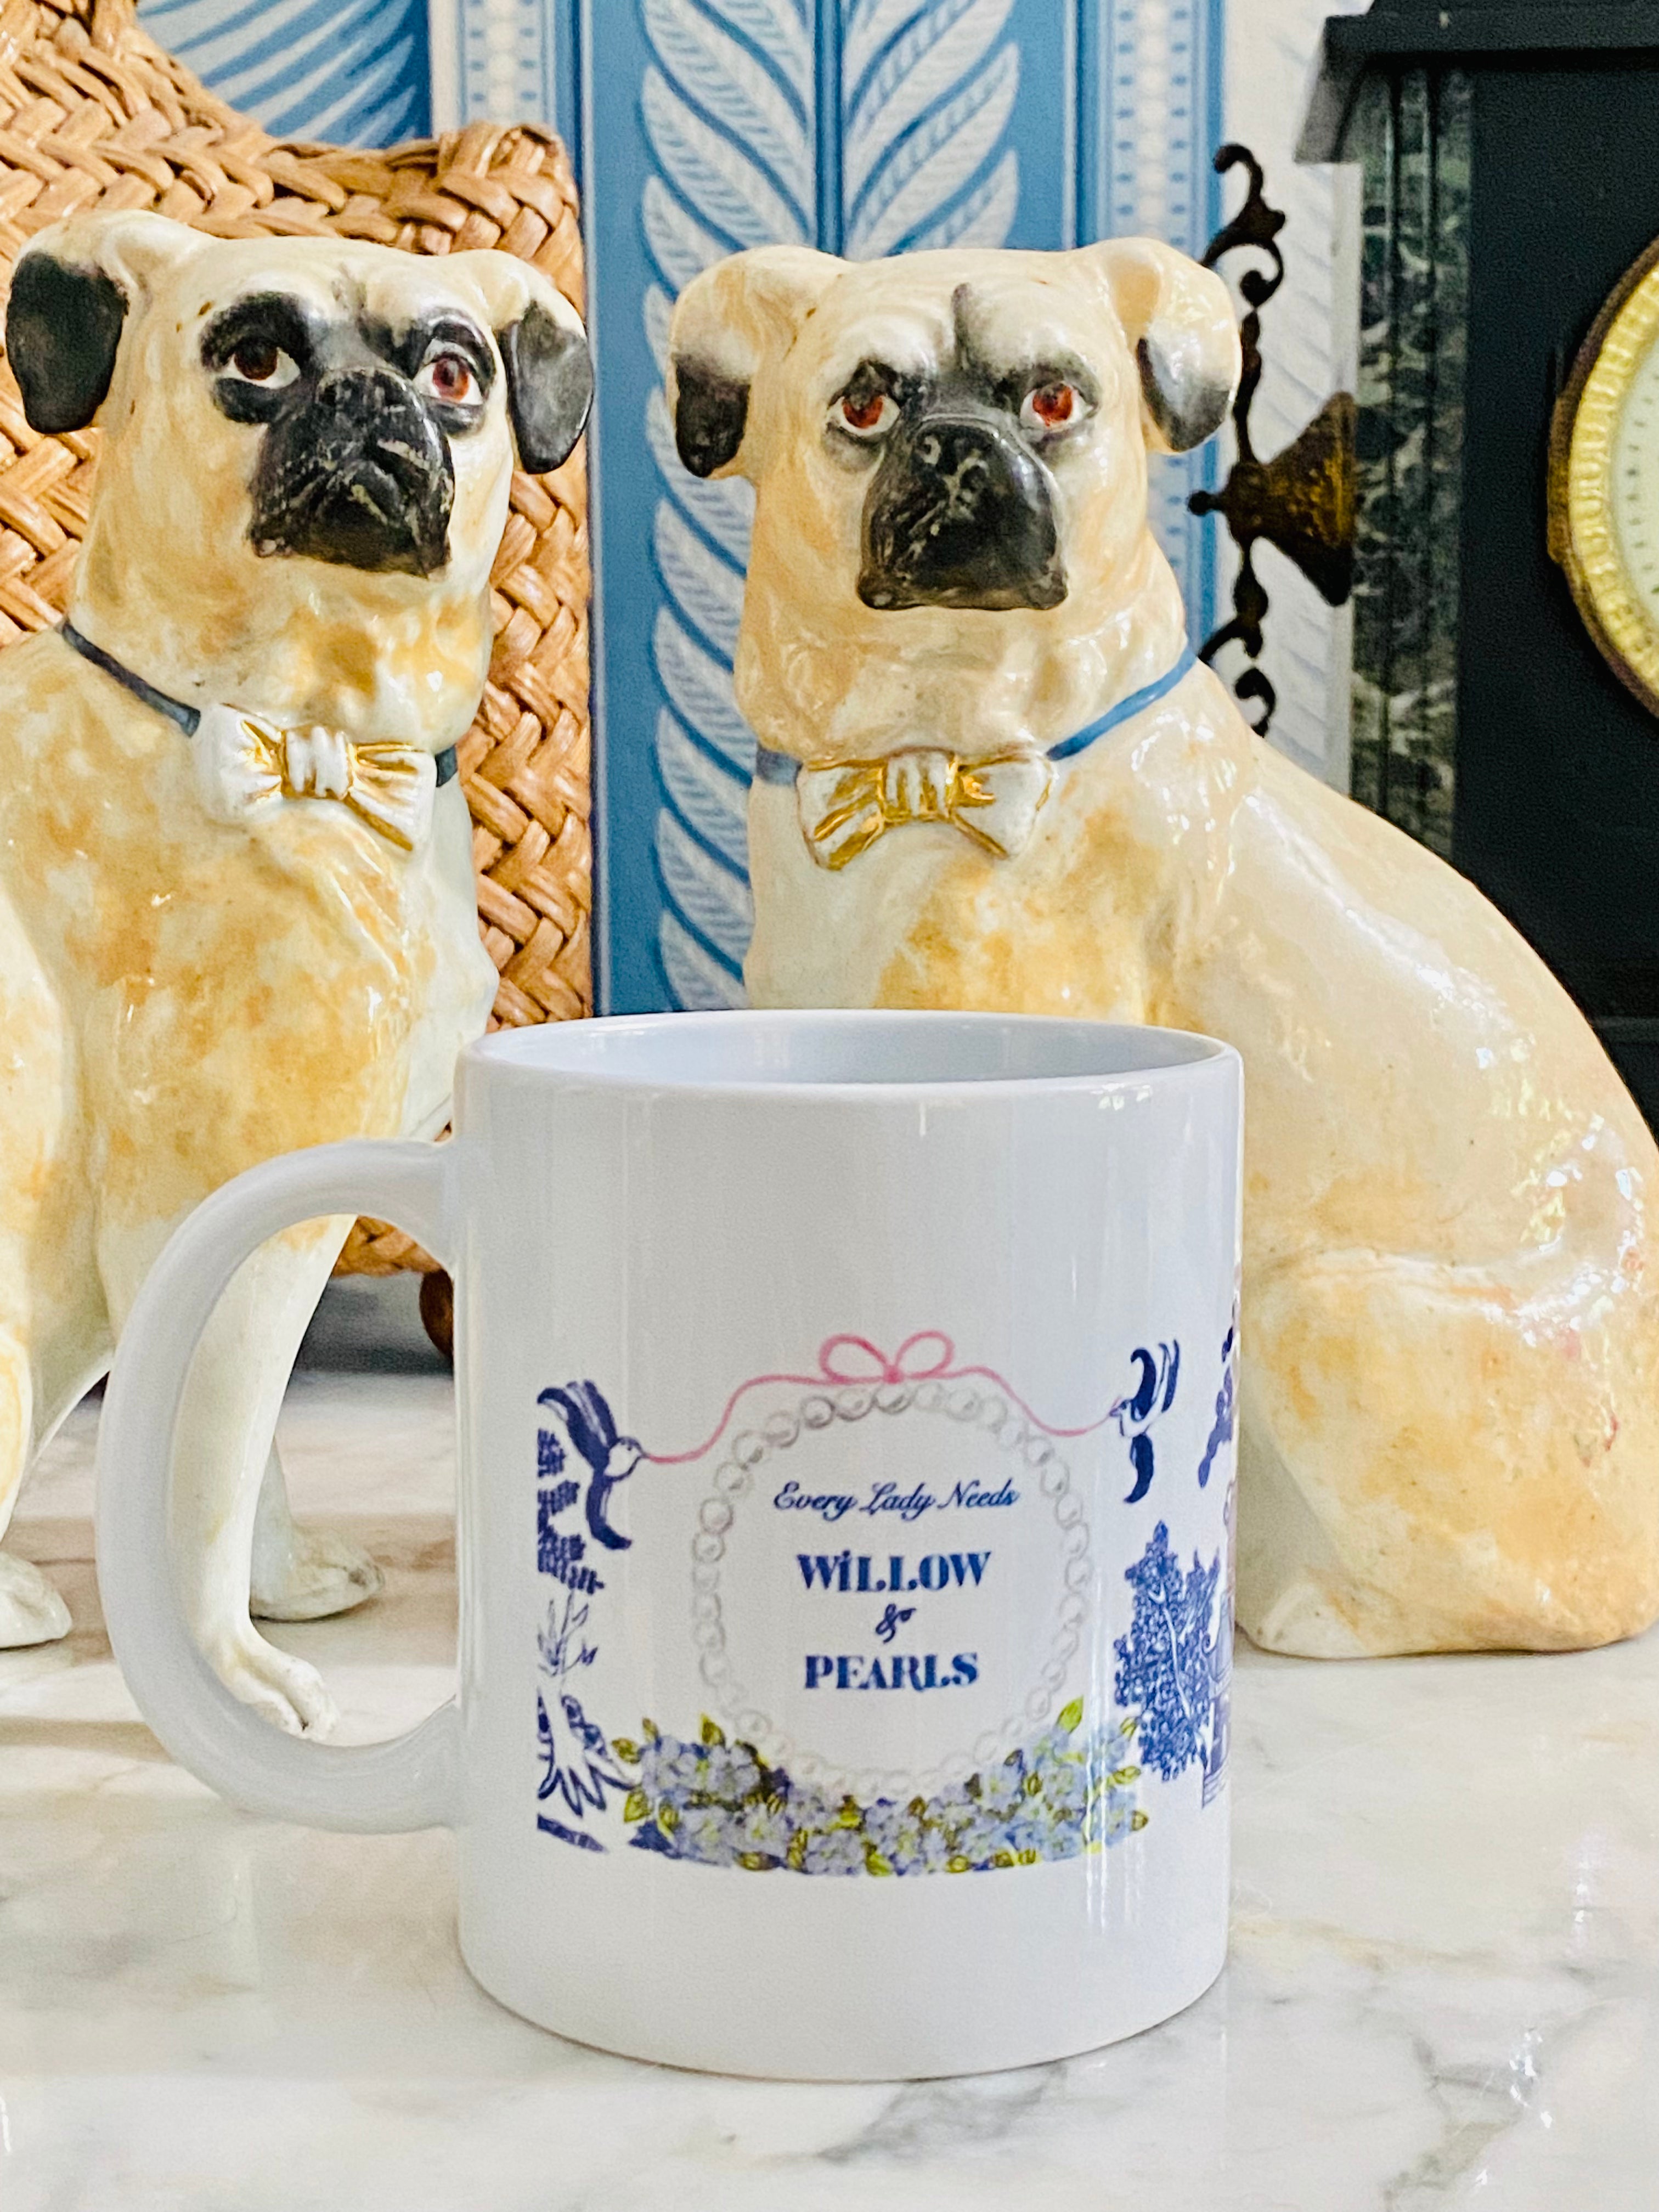 Every Lady Needs Willow & Pearls Mug